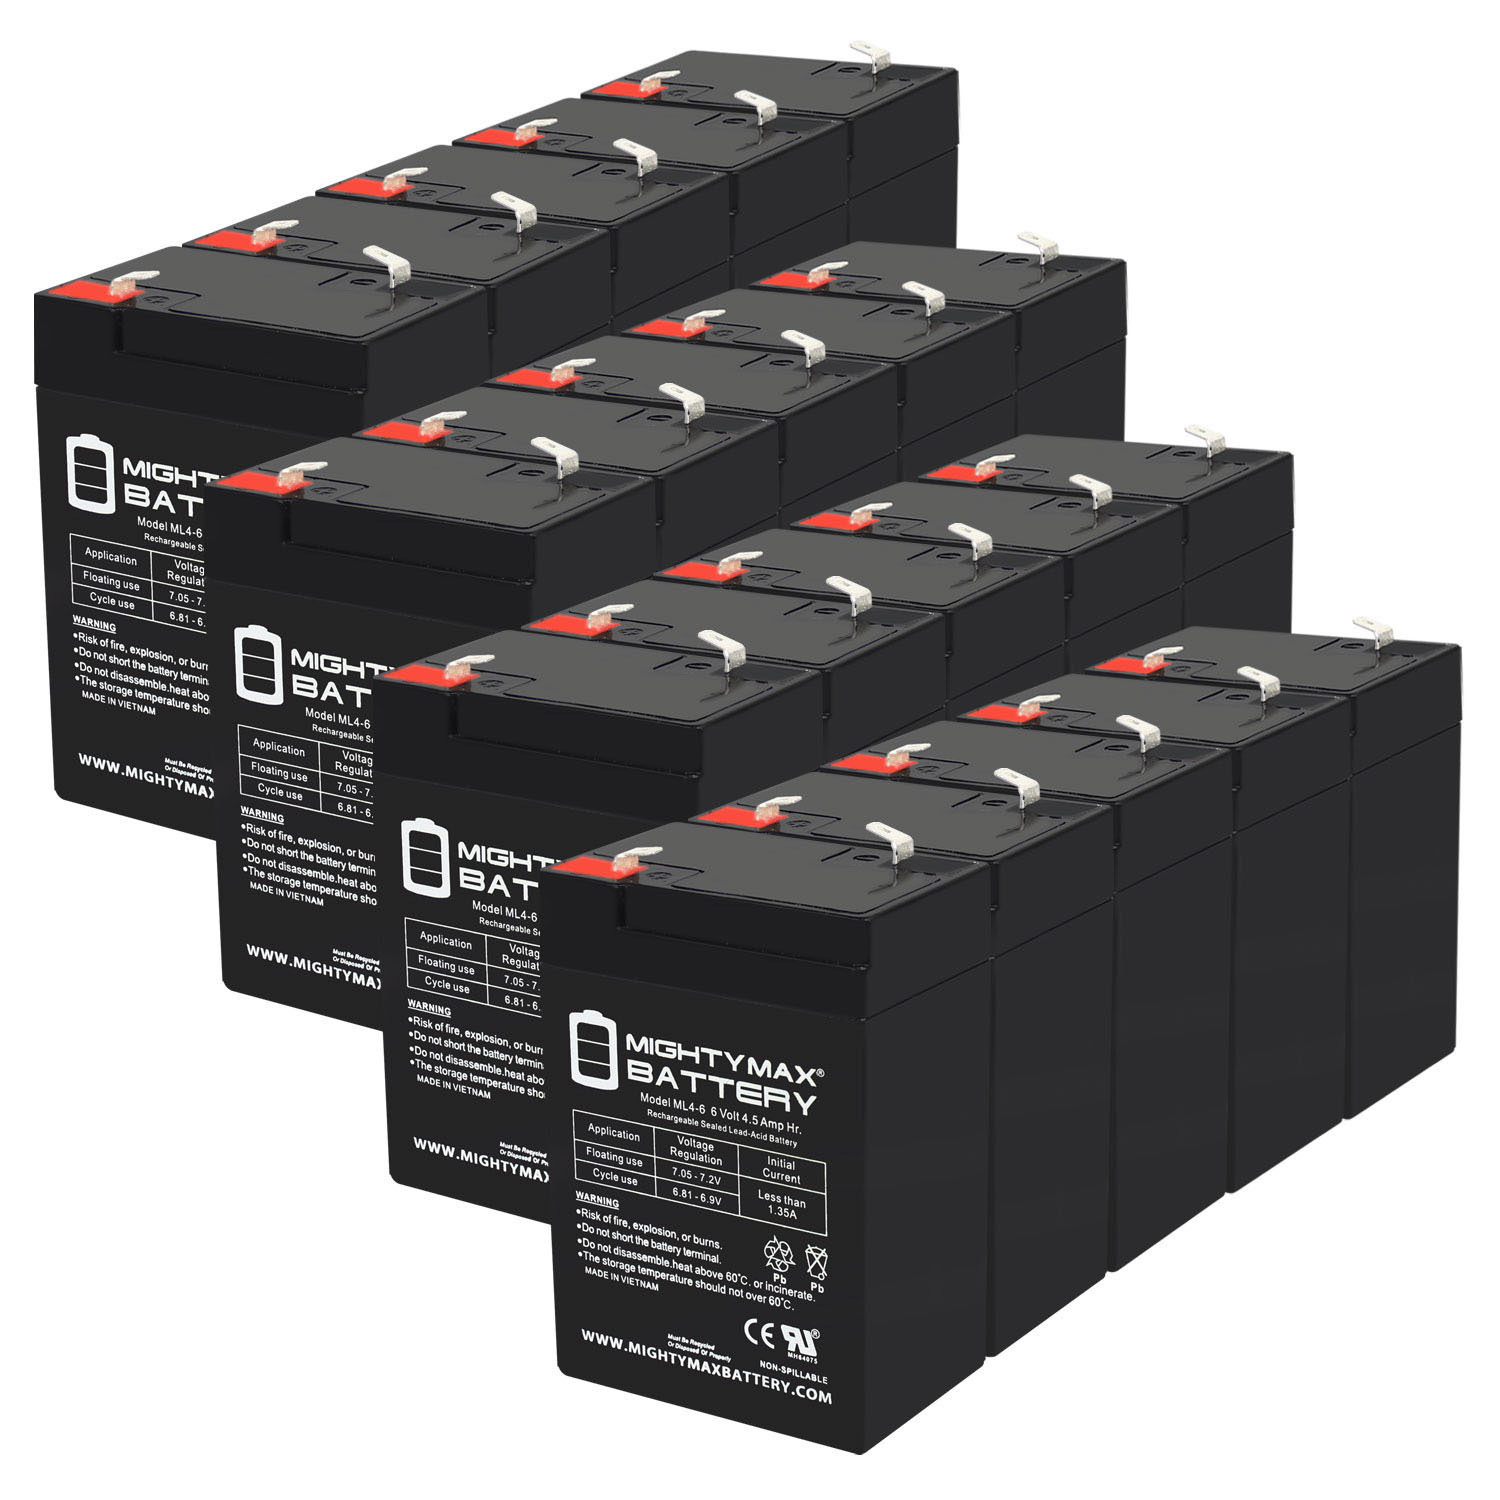 6V 4.5AH SLA Replacement Battery for Exide Q-5 - 20 Pack